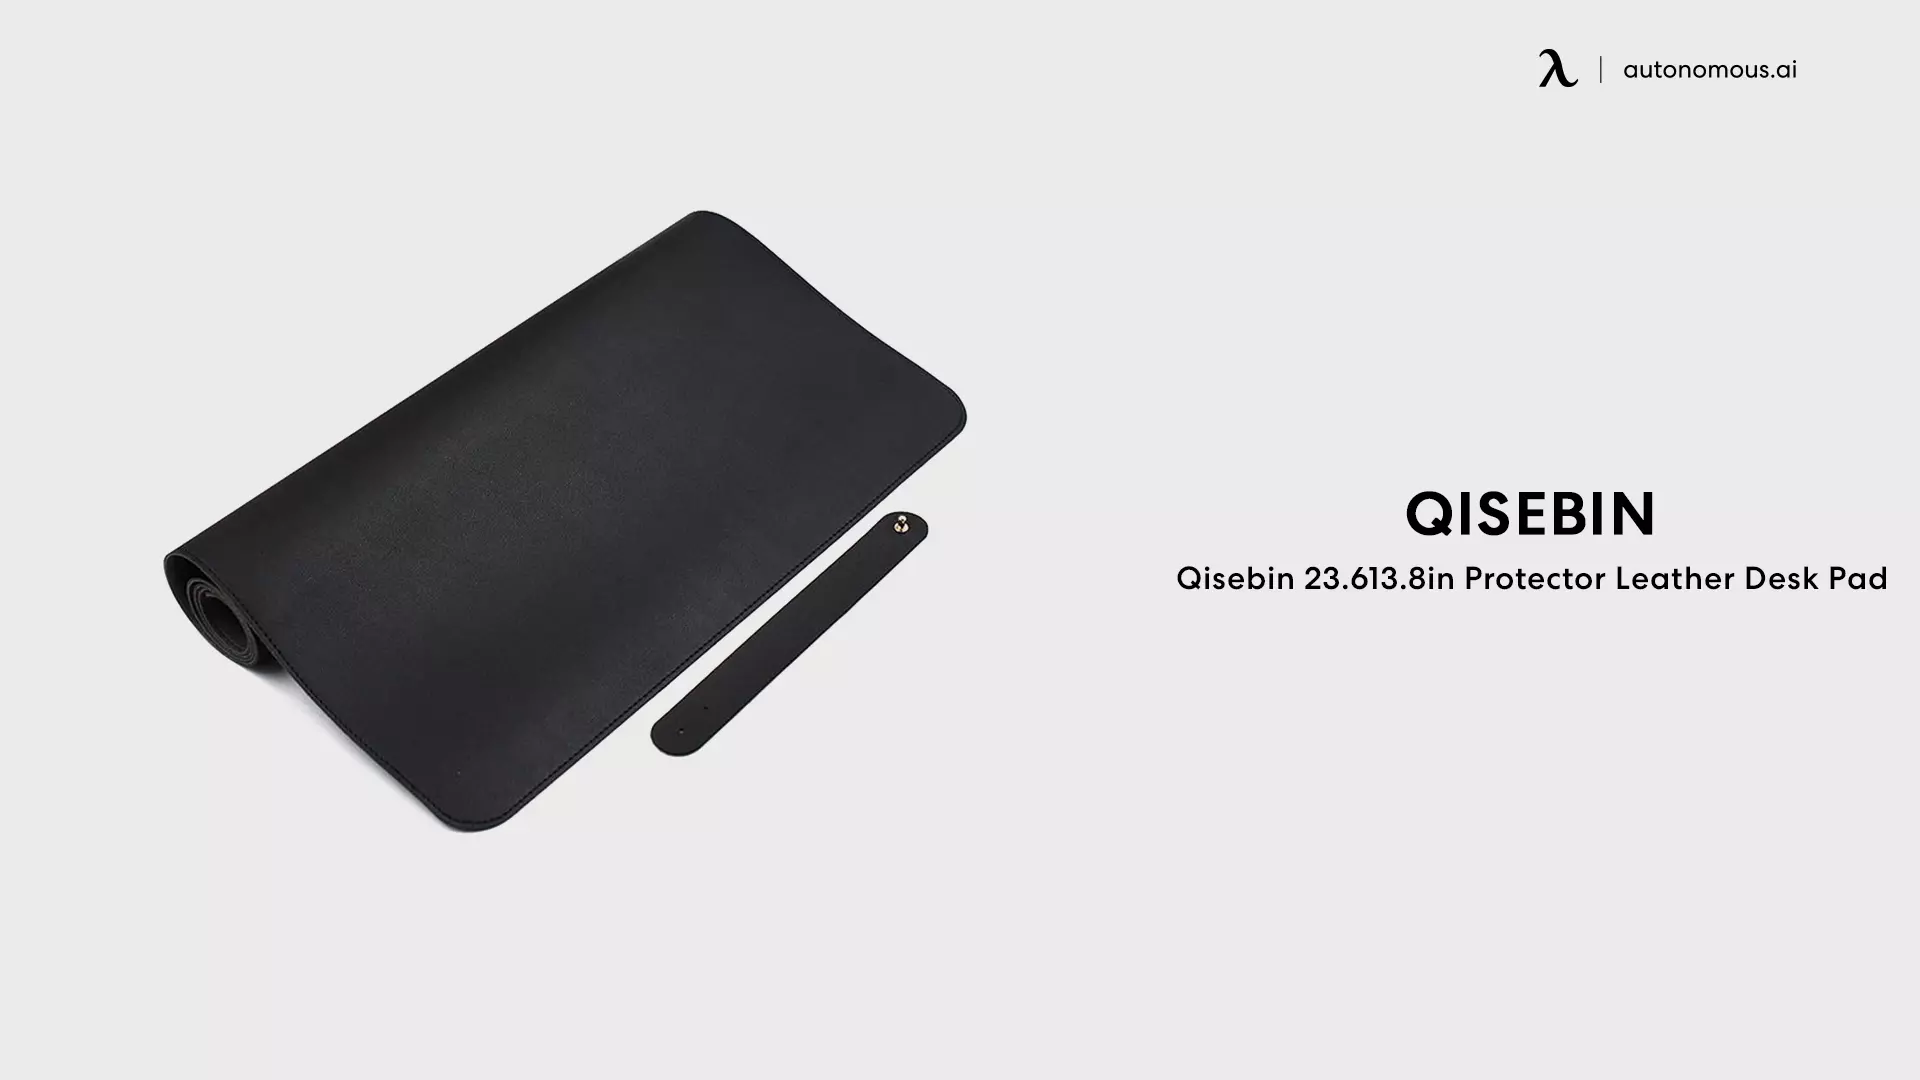 Qisebin 23.613.8in Protector Leather Desk Pad